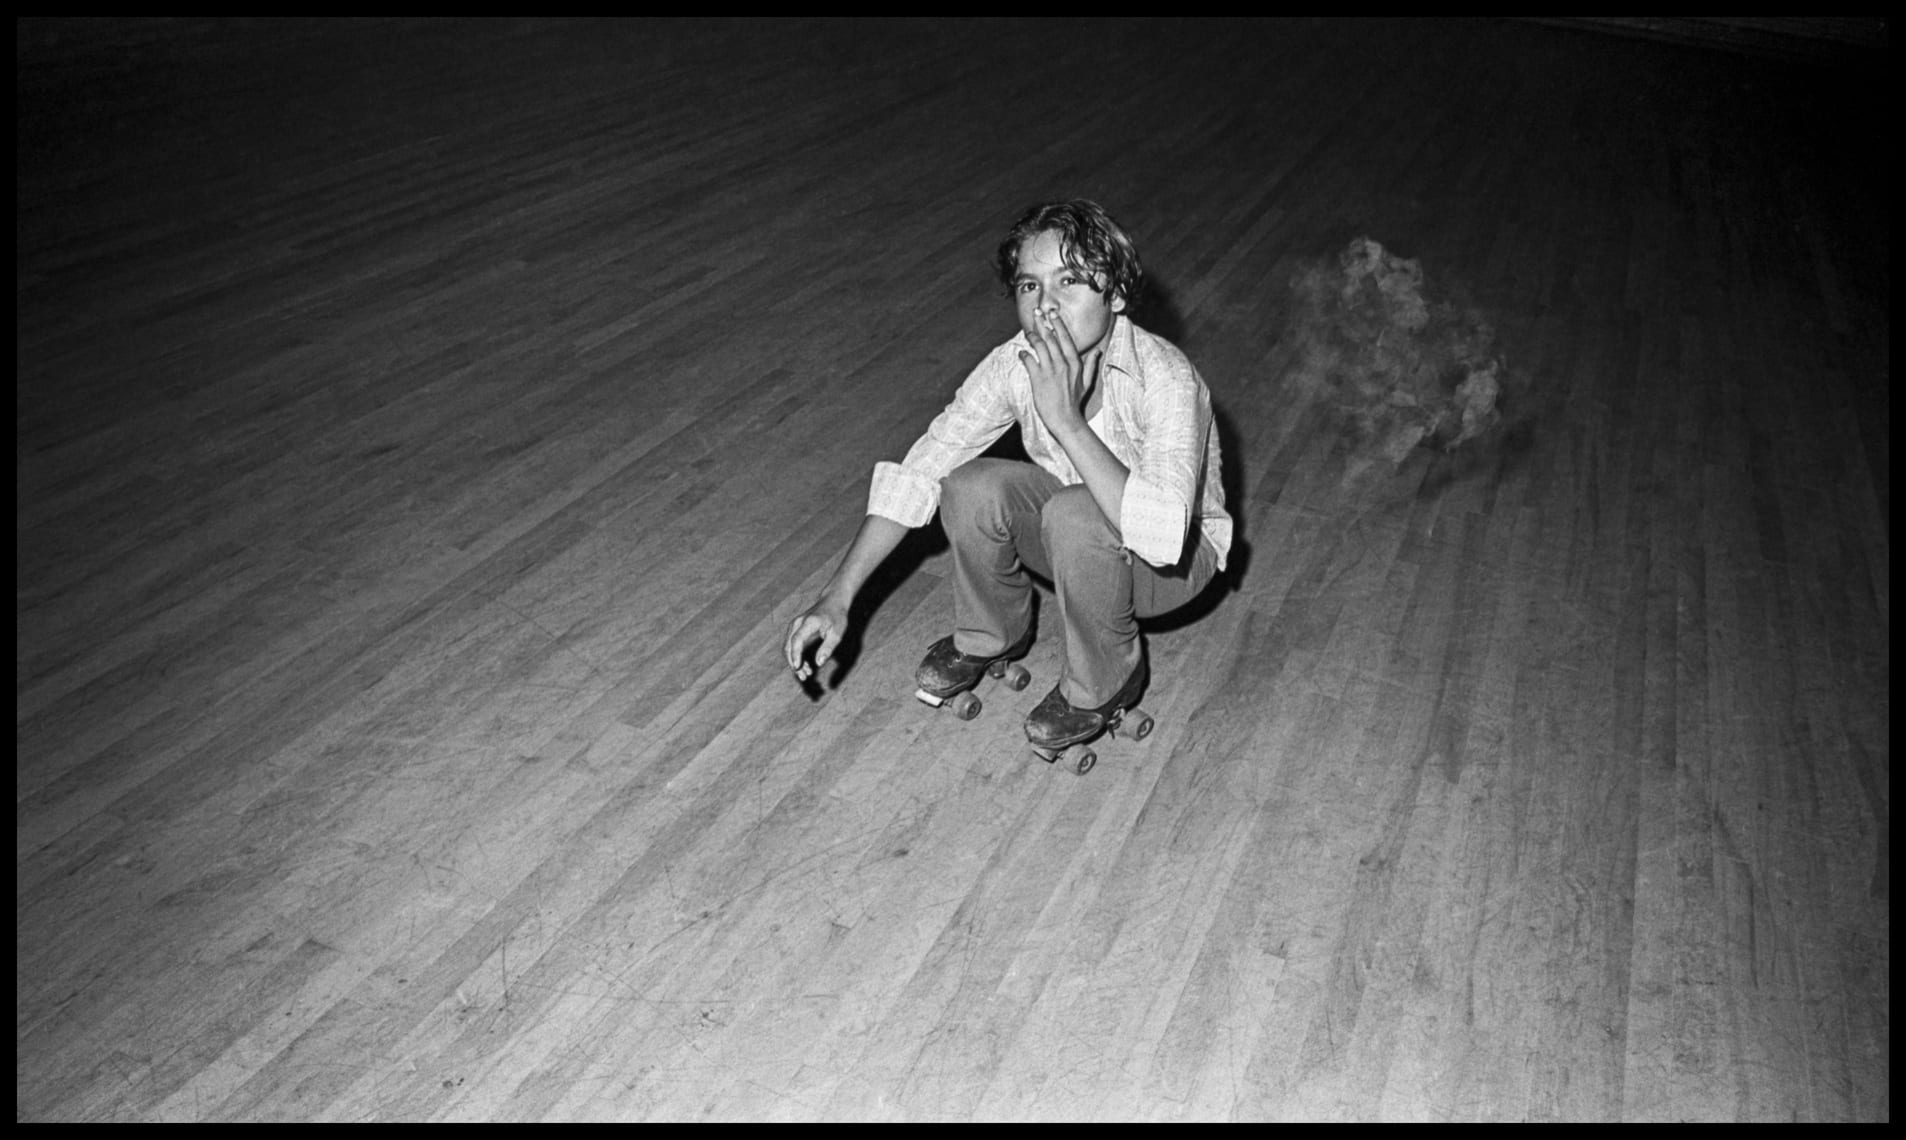 Sweetheart Roller Skating Rink - 1972-1973 - Six Mile Creek, Hillsborough County (Tampa) FL ©Bill Yates